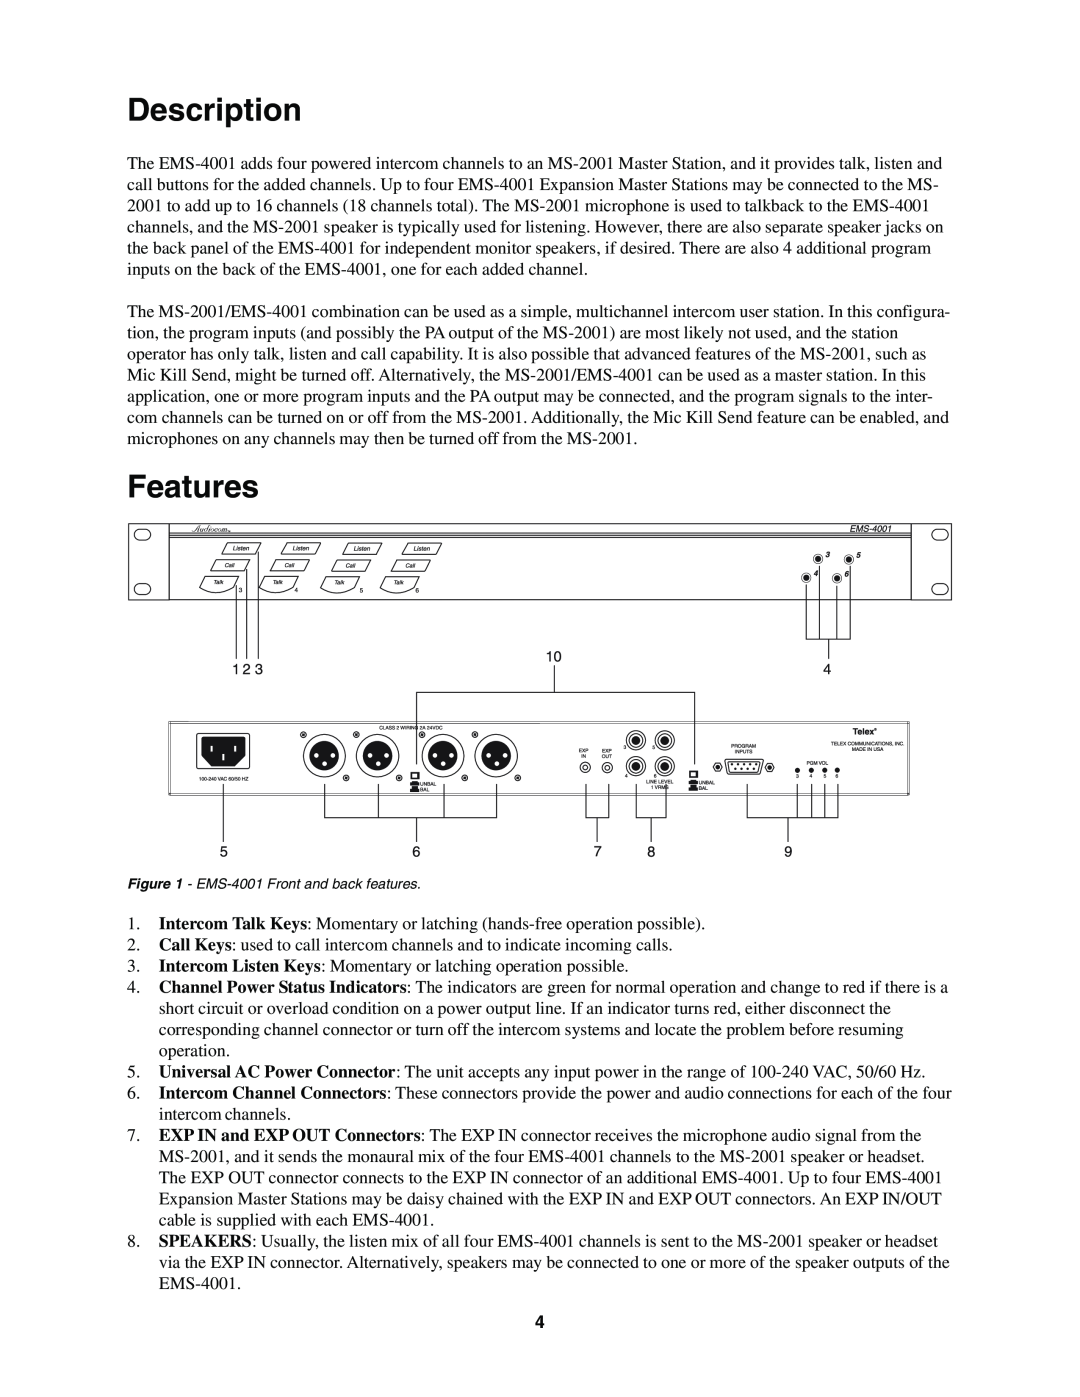 Telex manual Description, Features, EMS-4001Front and back features 